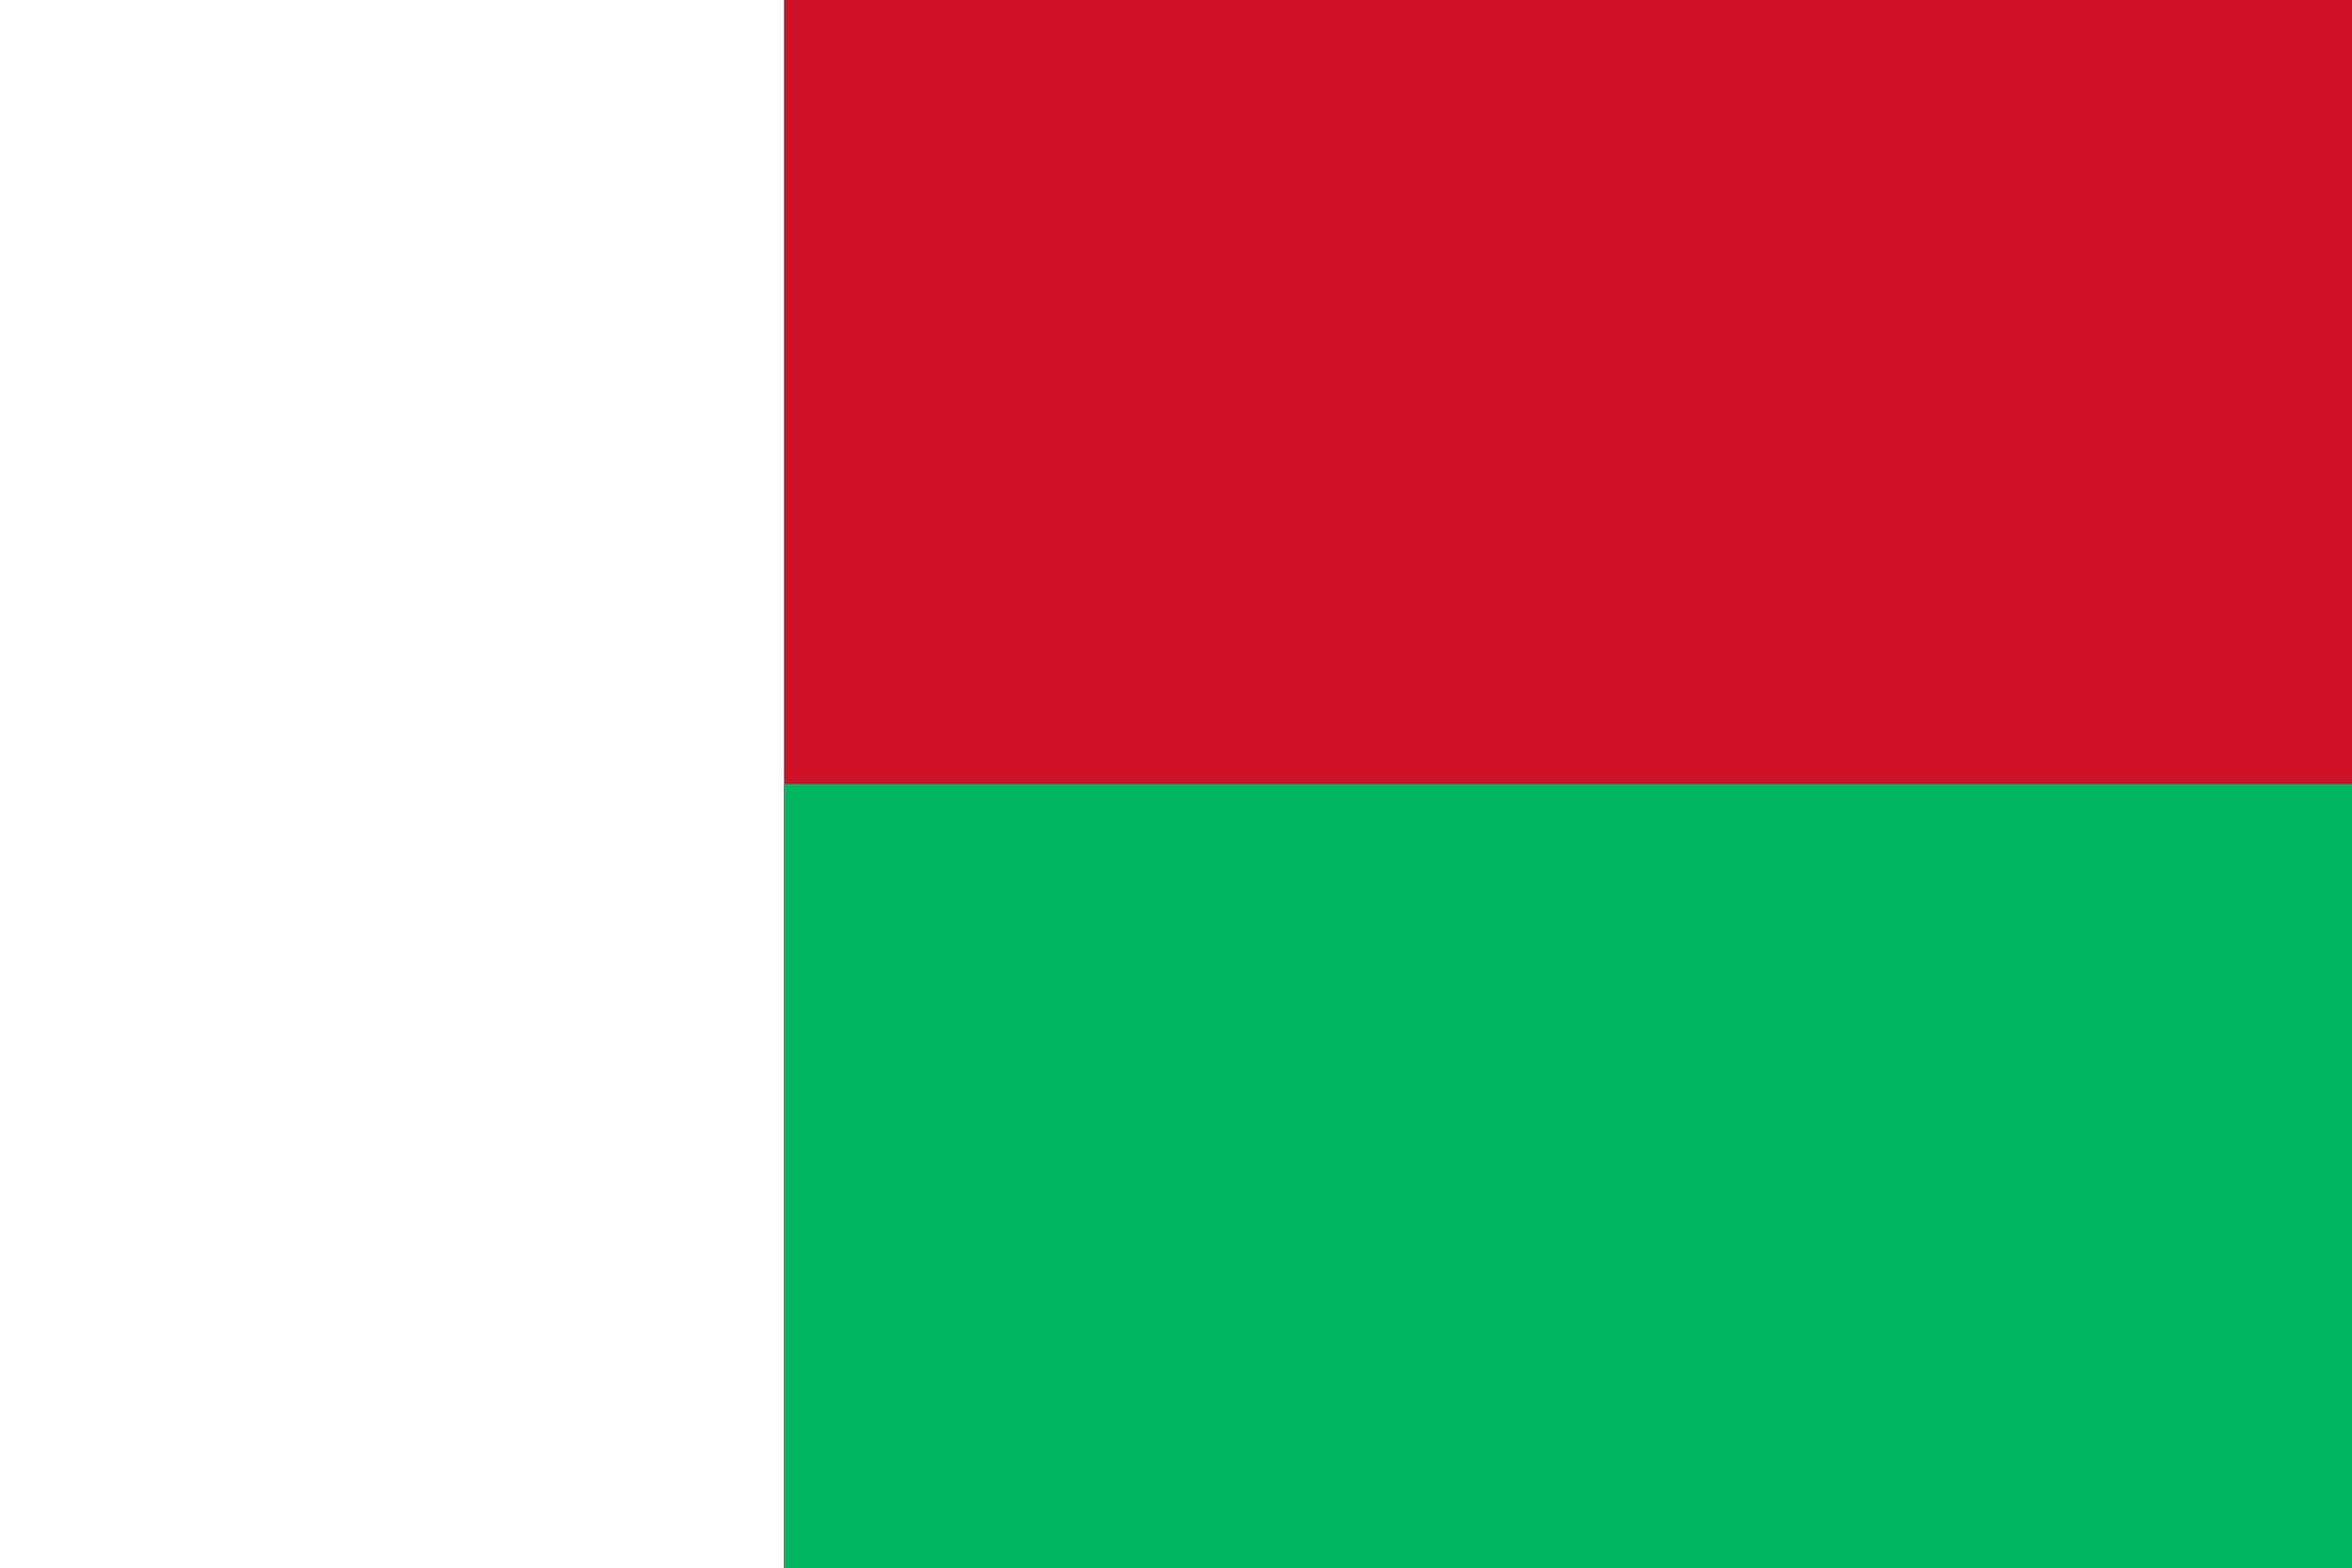 Madagascar's flag